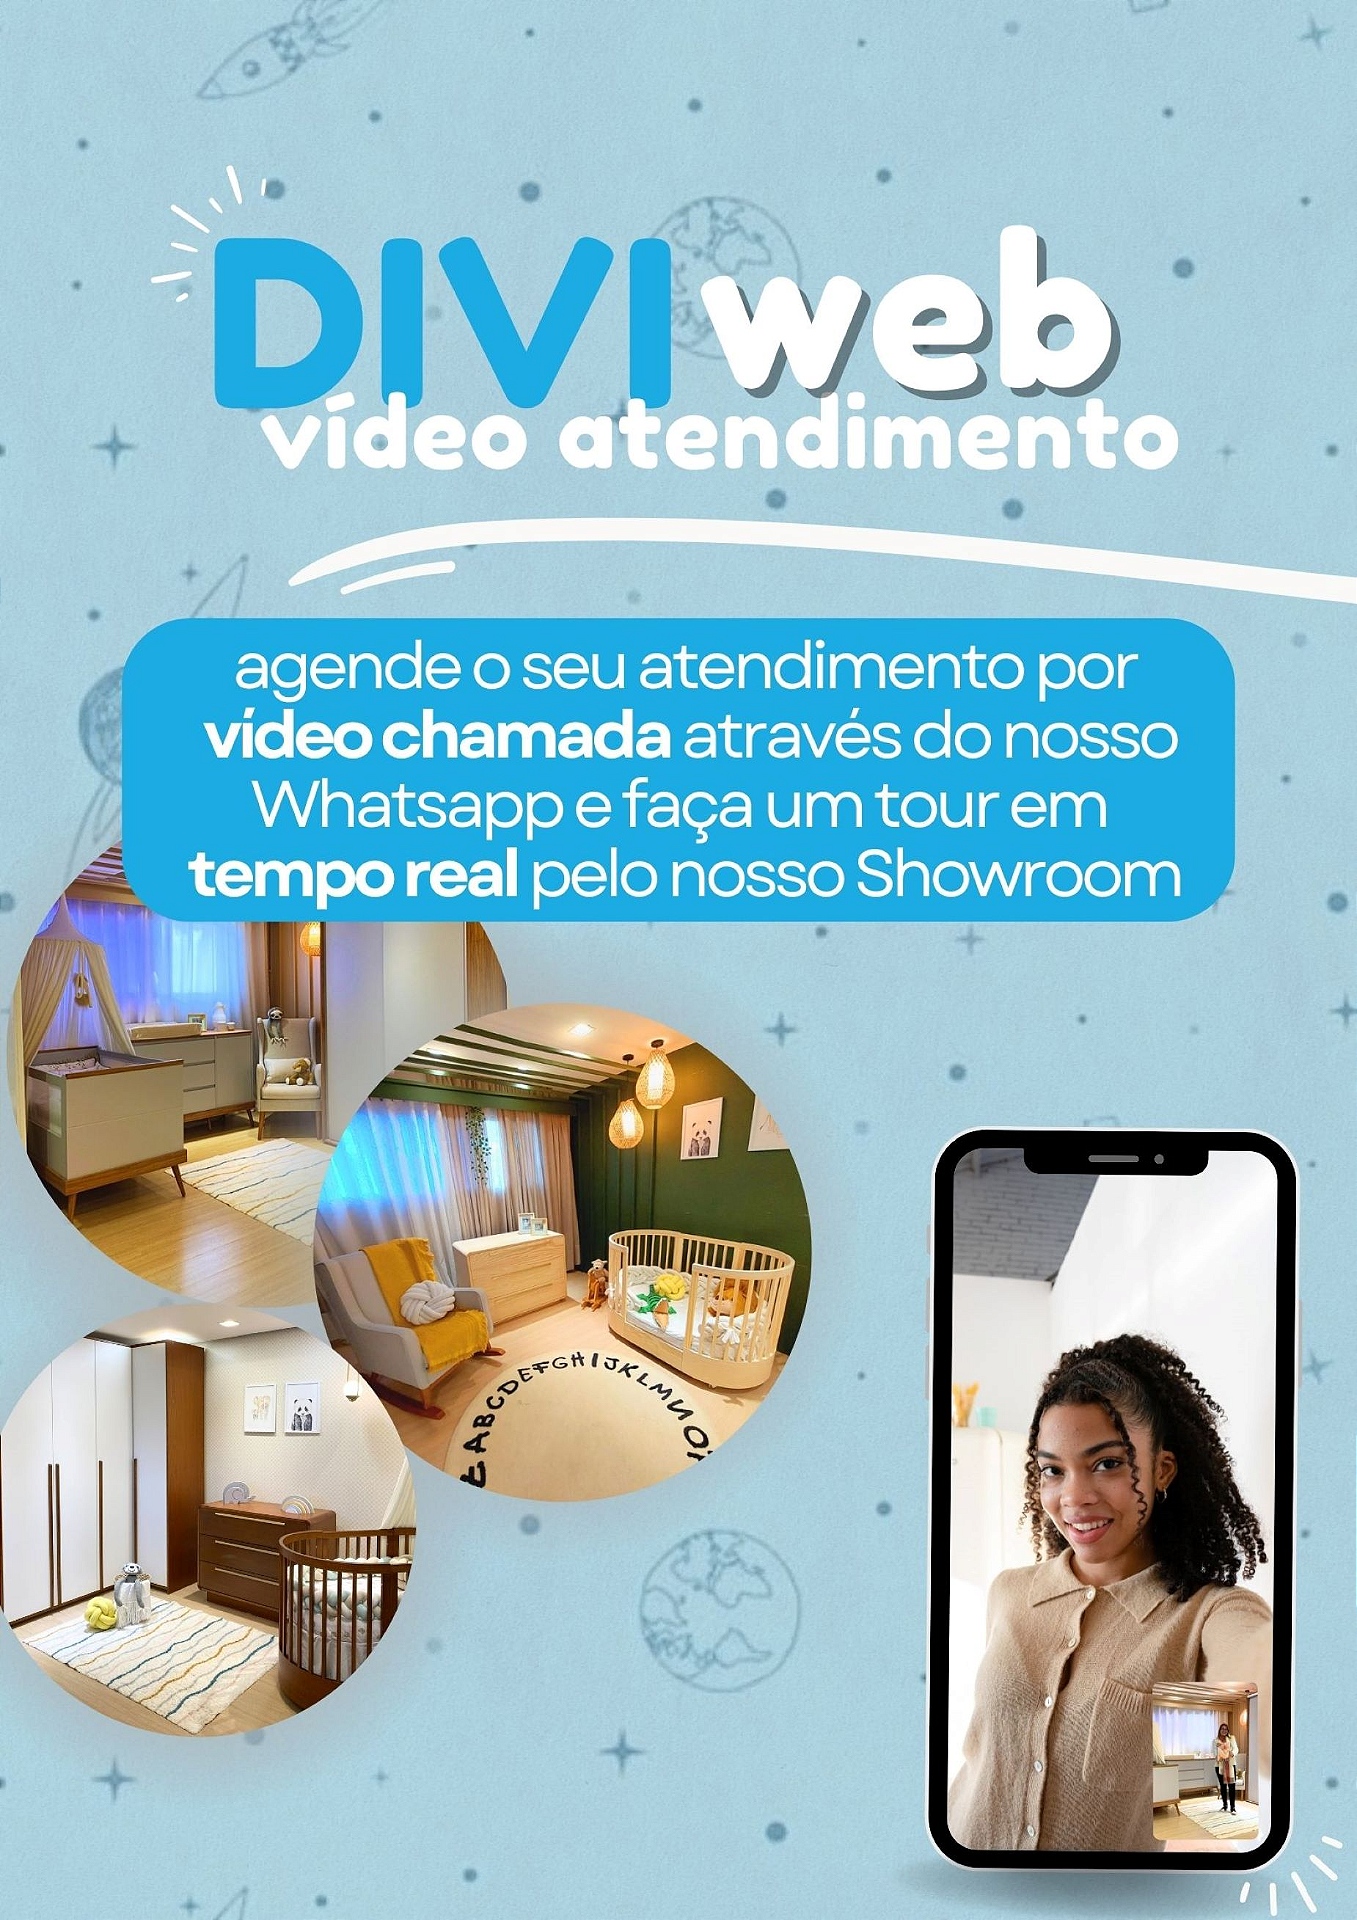 [mobile] diviweb